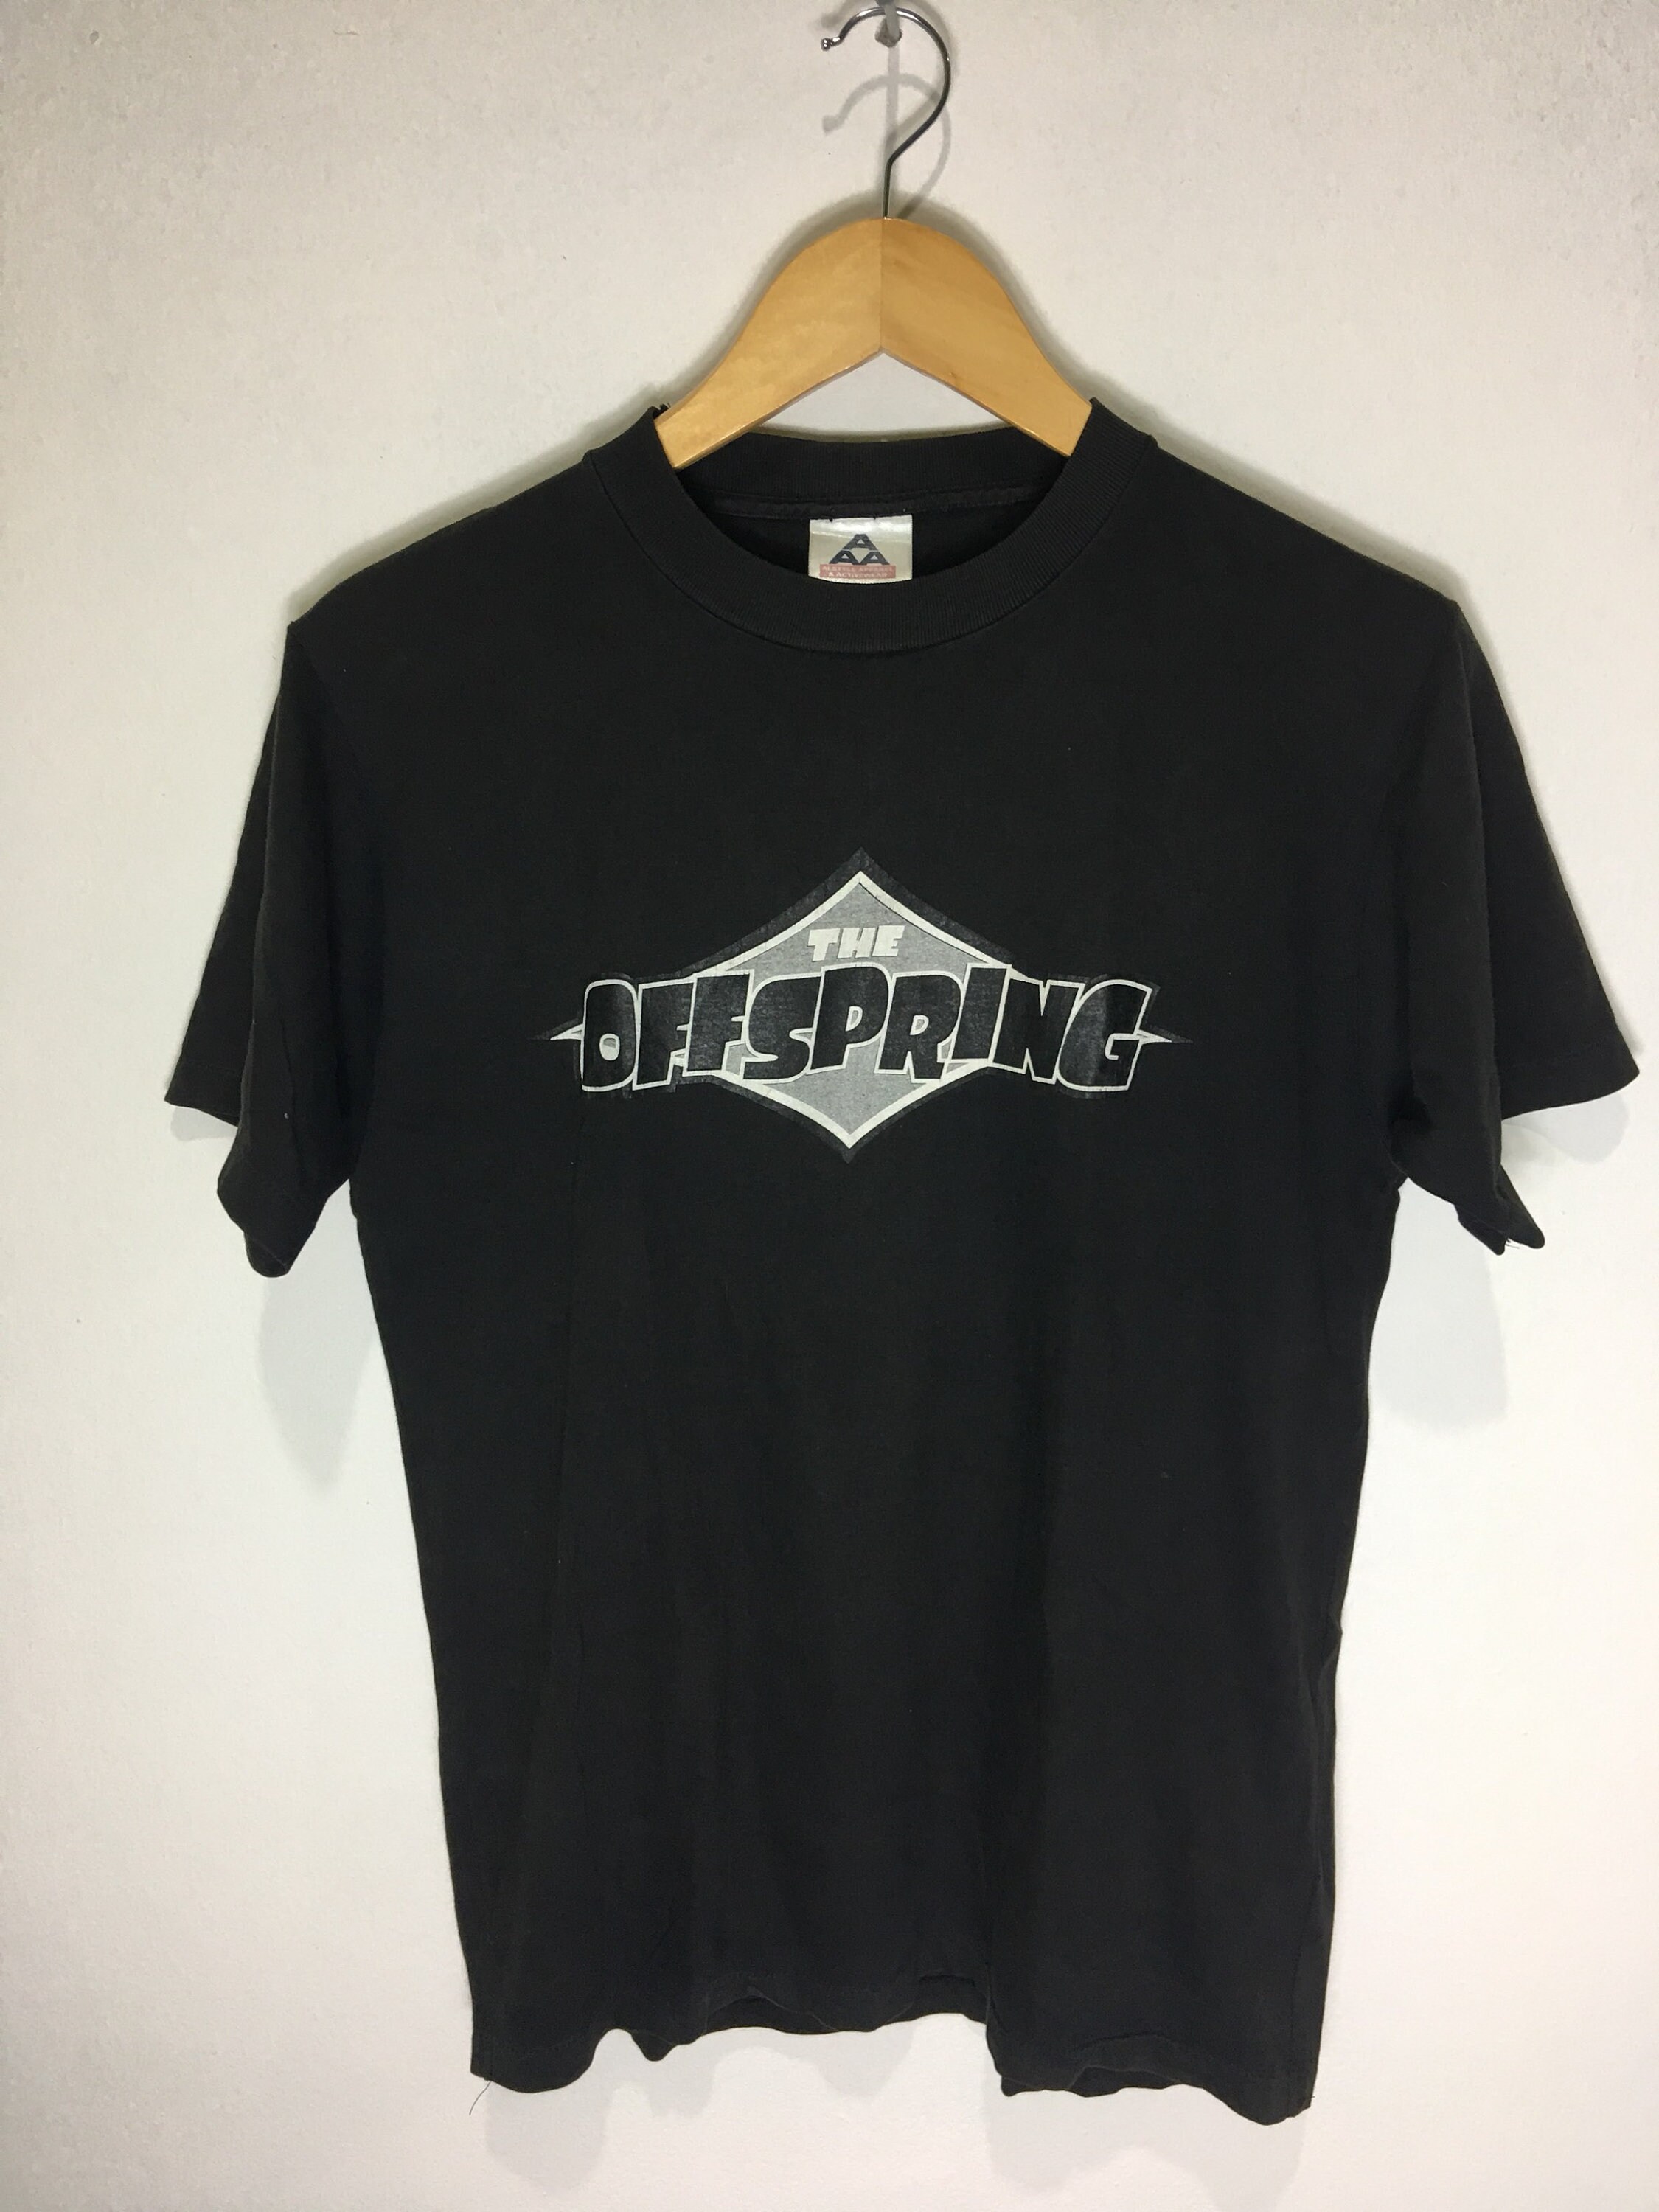 Rare vintage 90s The Offspring punk band tour shirt | Etsy